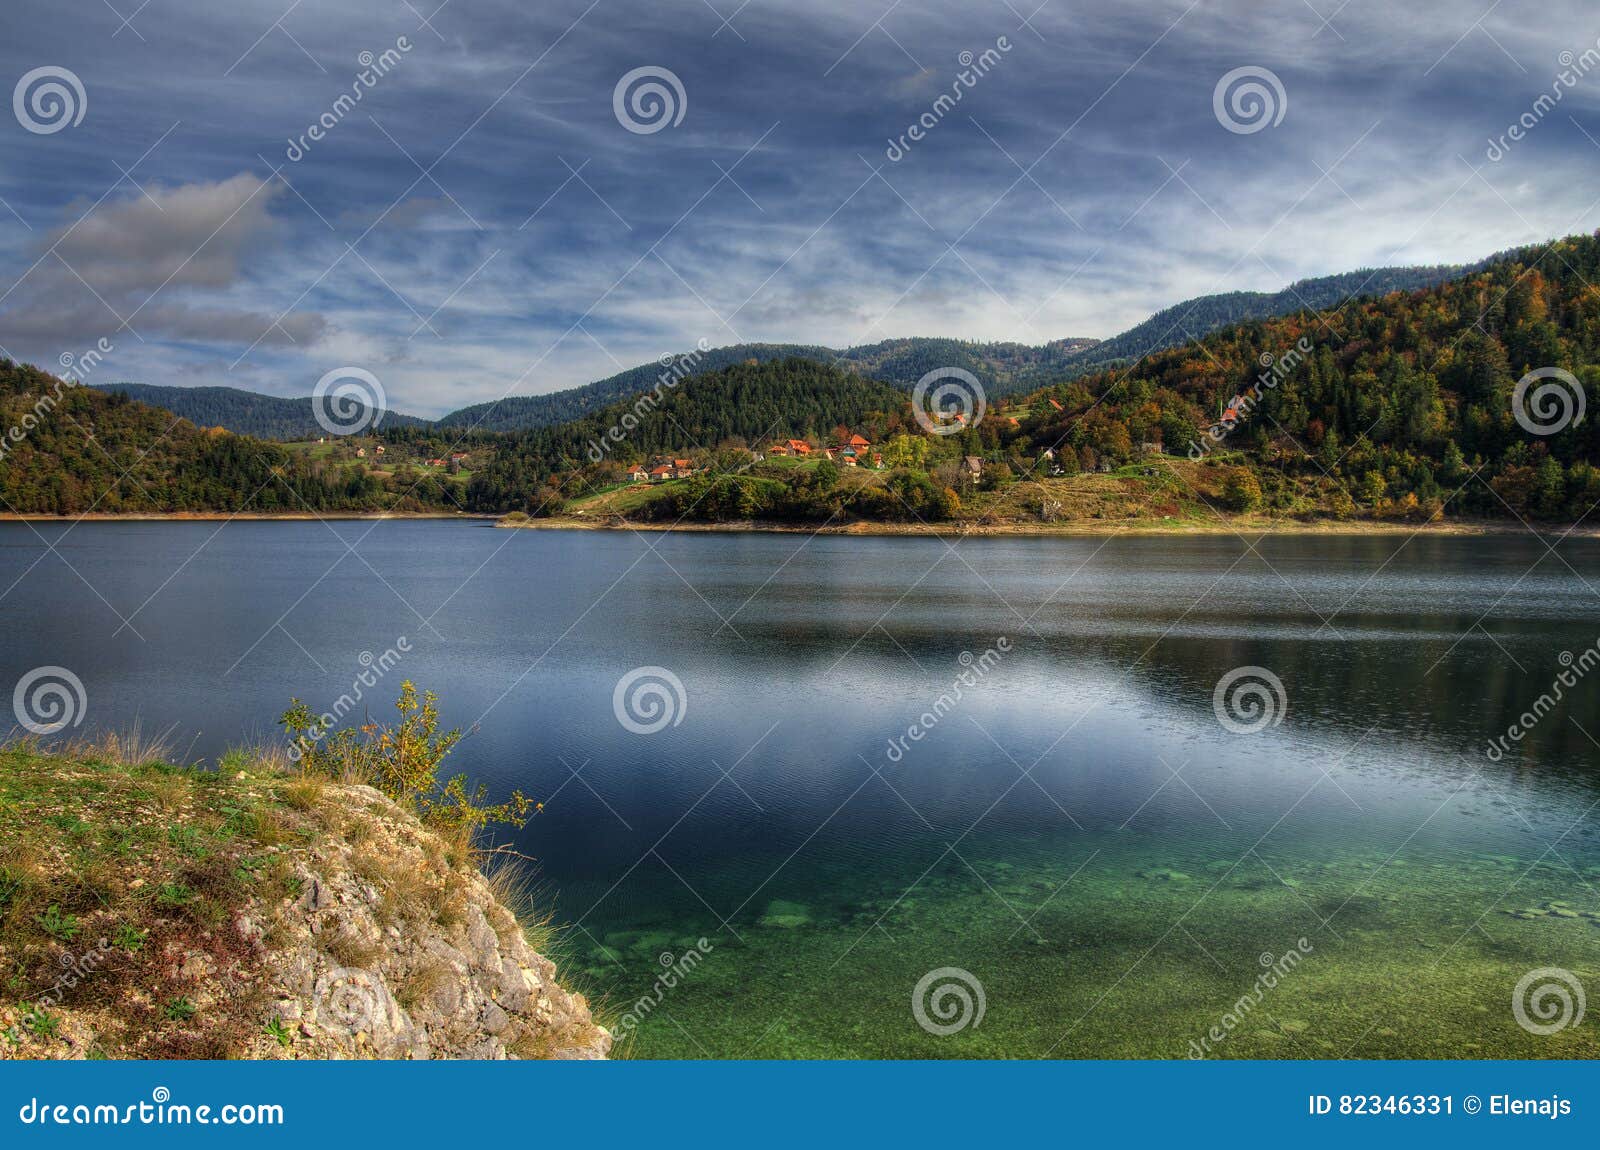 autumn near zaovine lake, western serbia